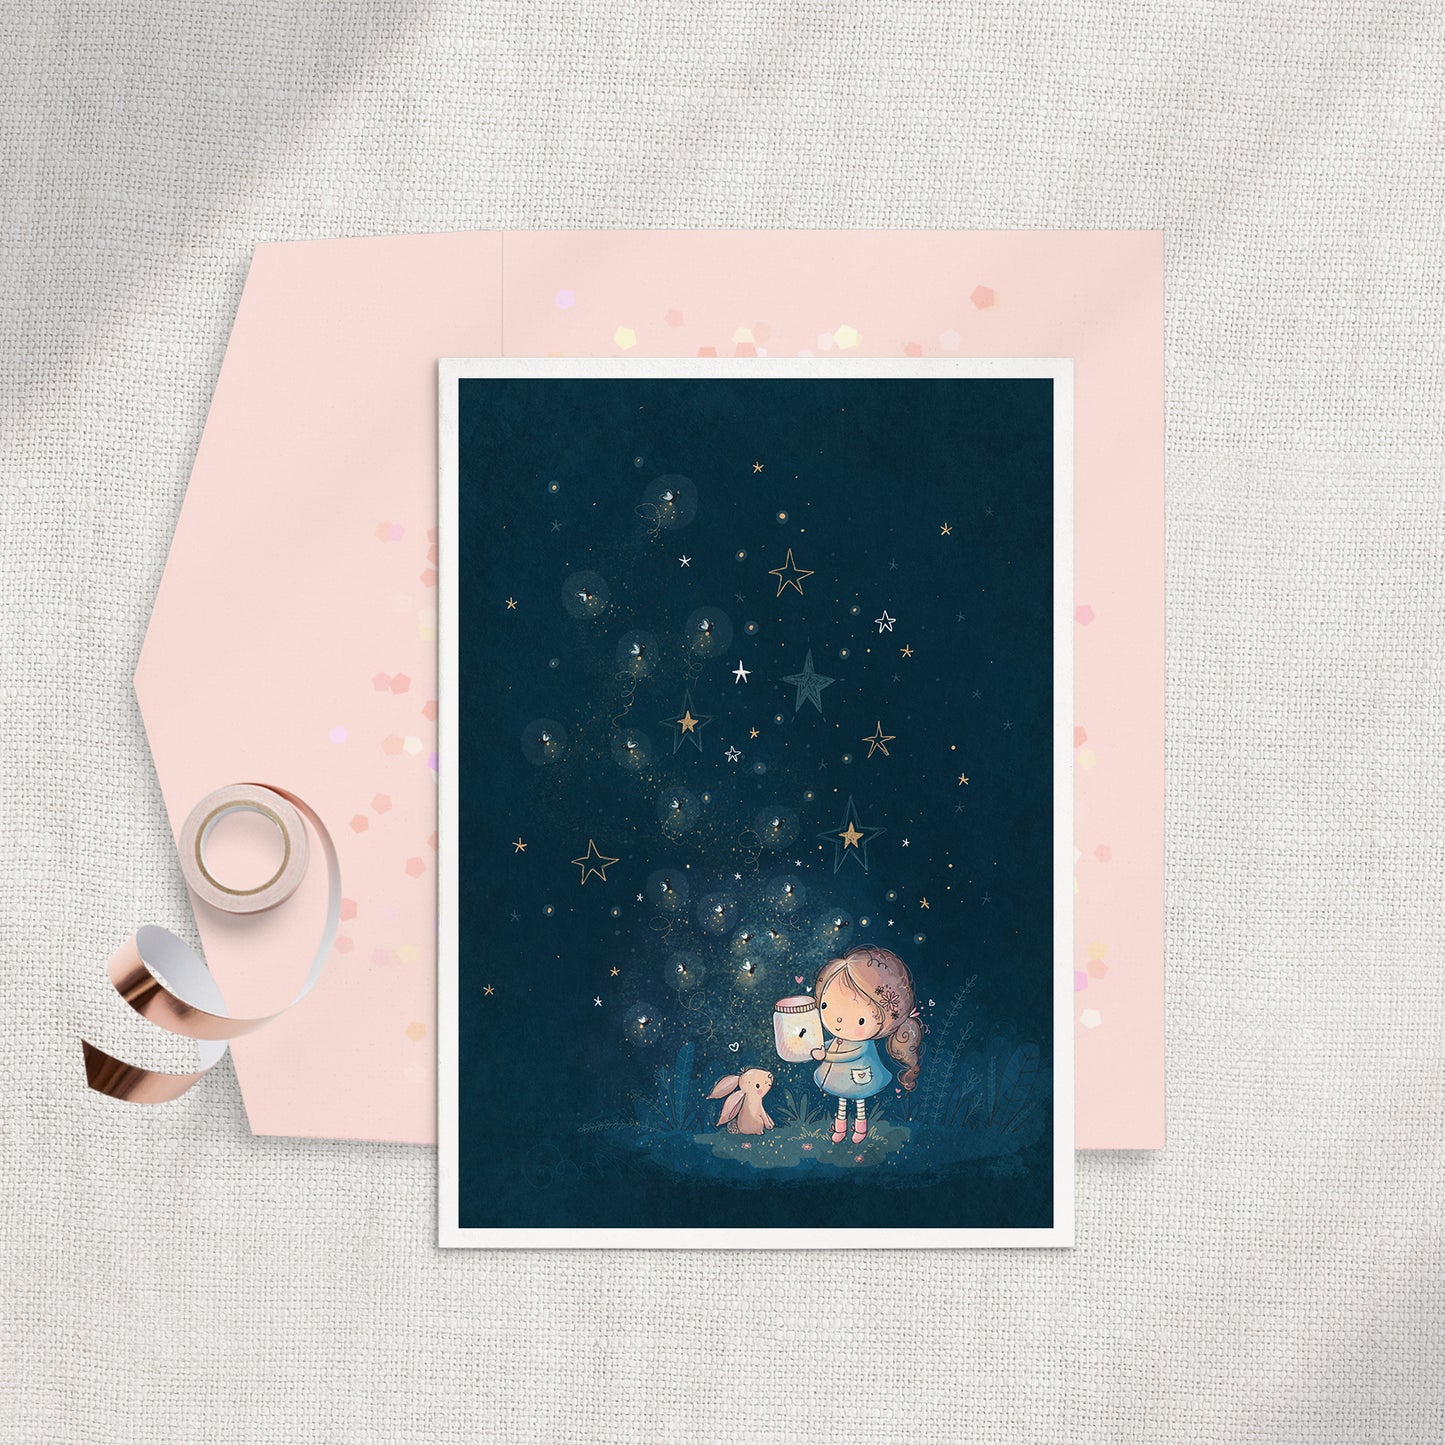 Fireflies 5x7 Greeting Card